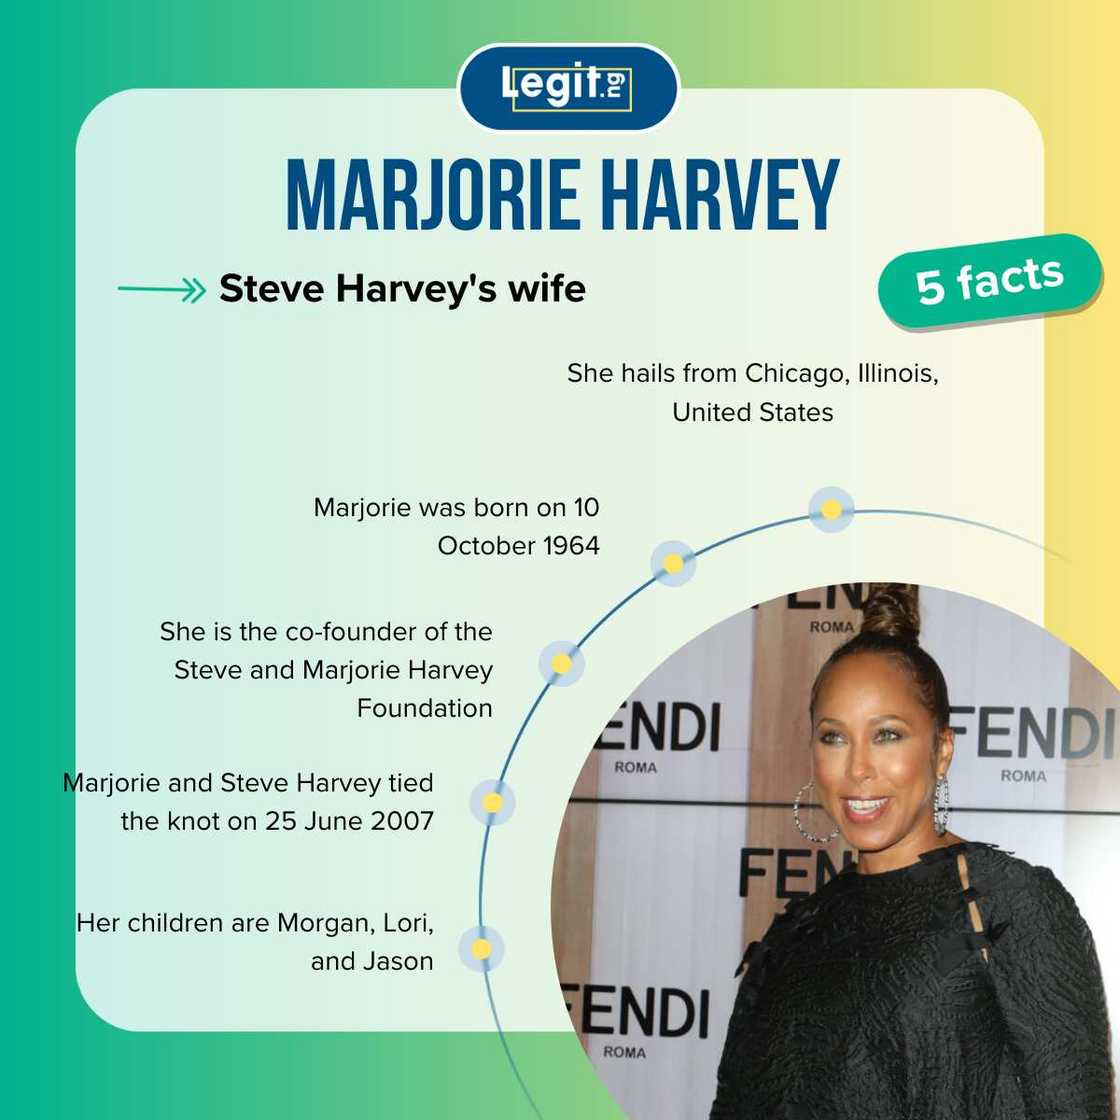 Facts about Marjorie Harvey